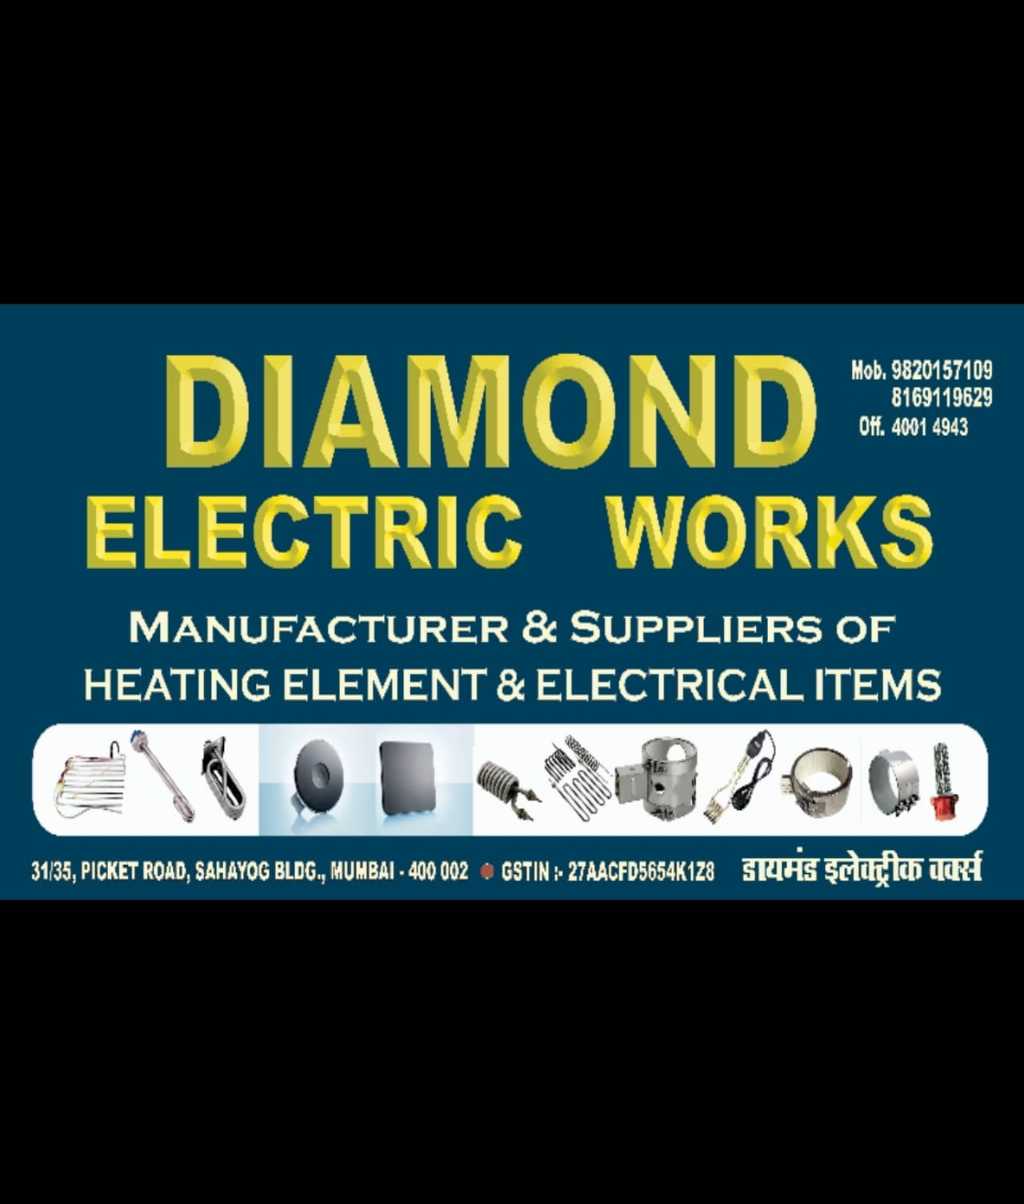 DIAMOND ELECTRIC WORKS